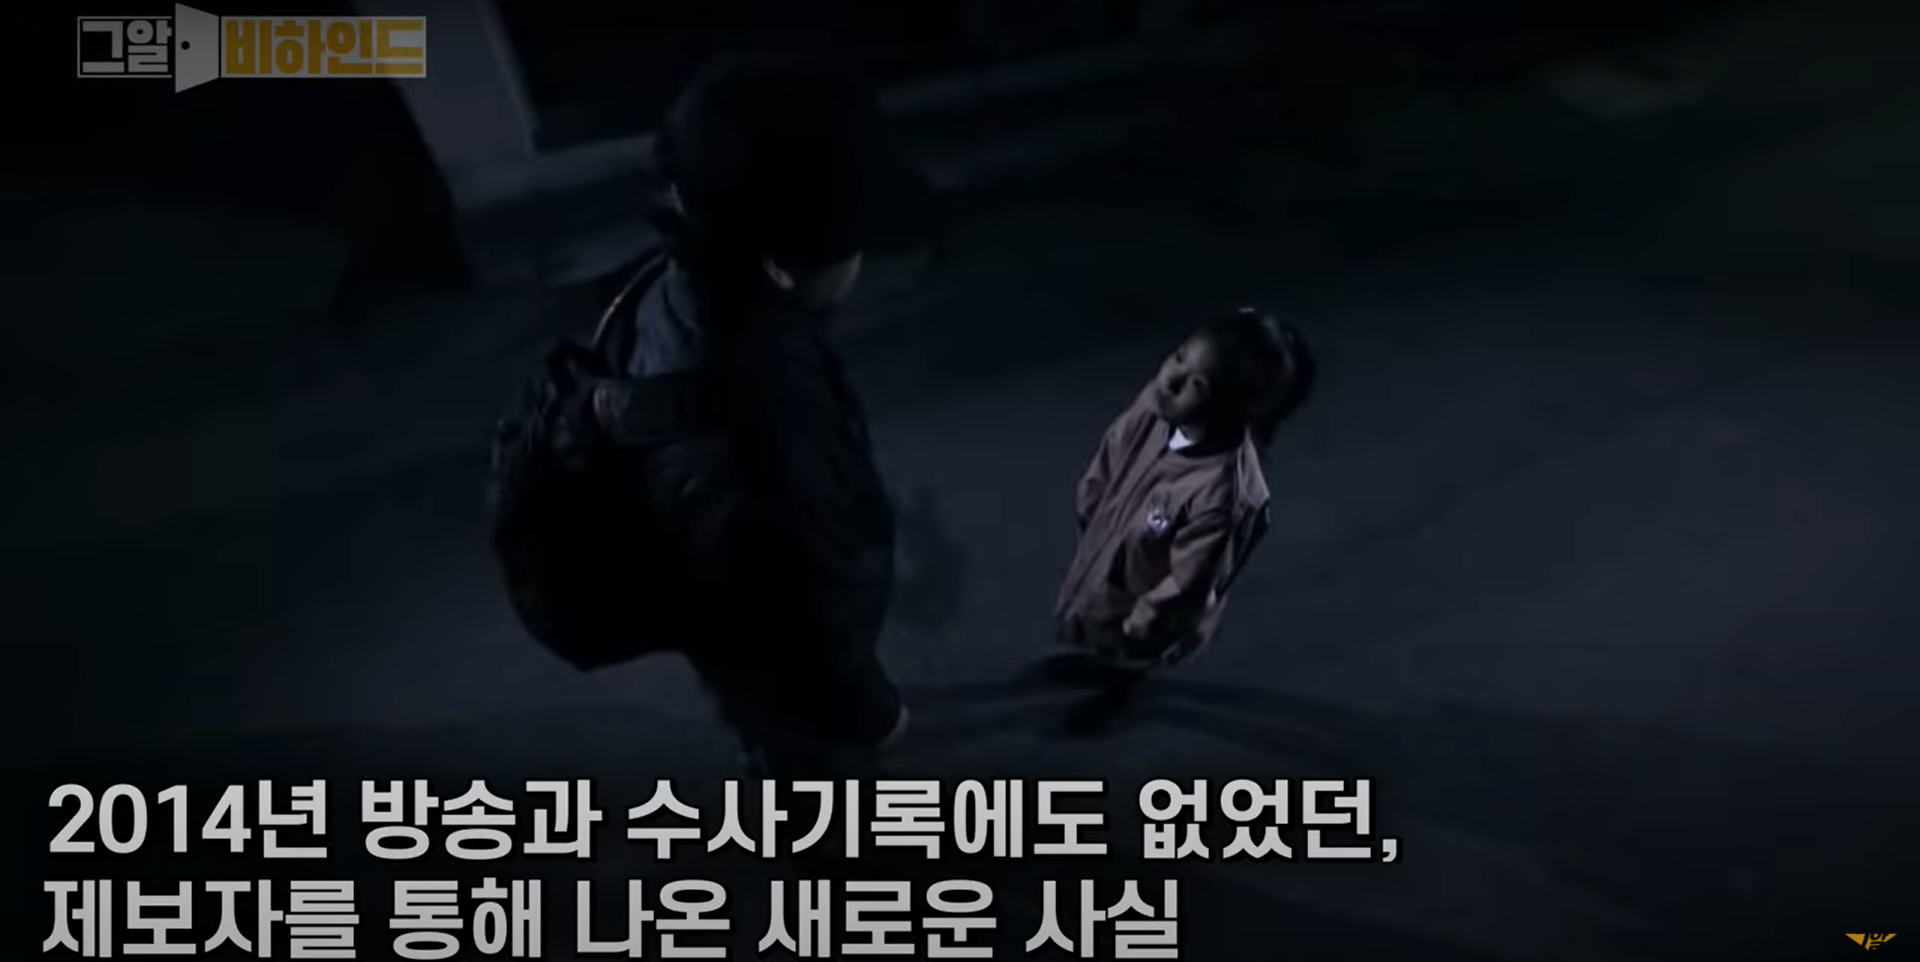 unsolved crimes in korea - eyewitness